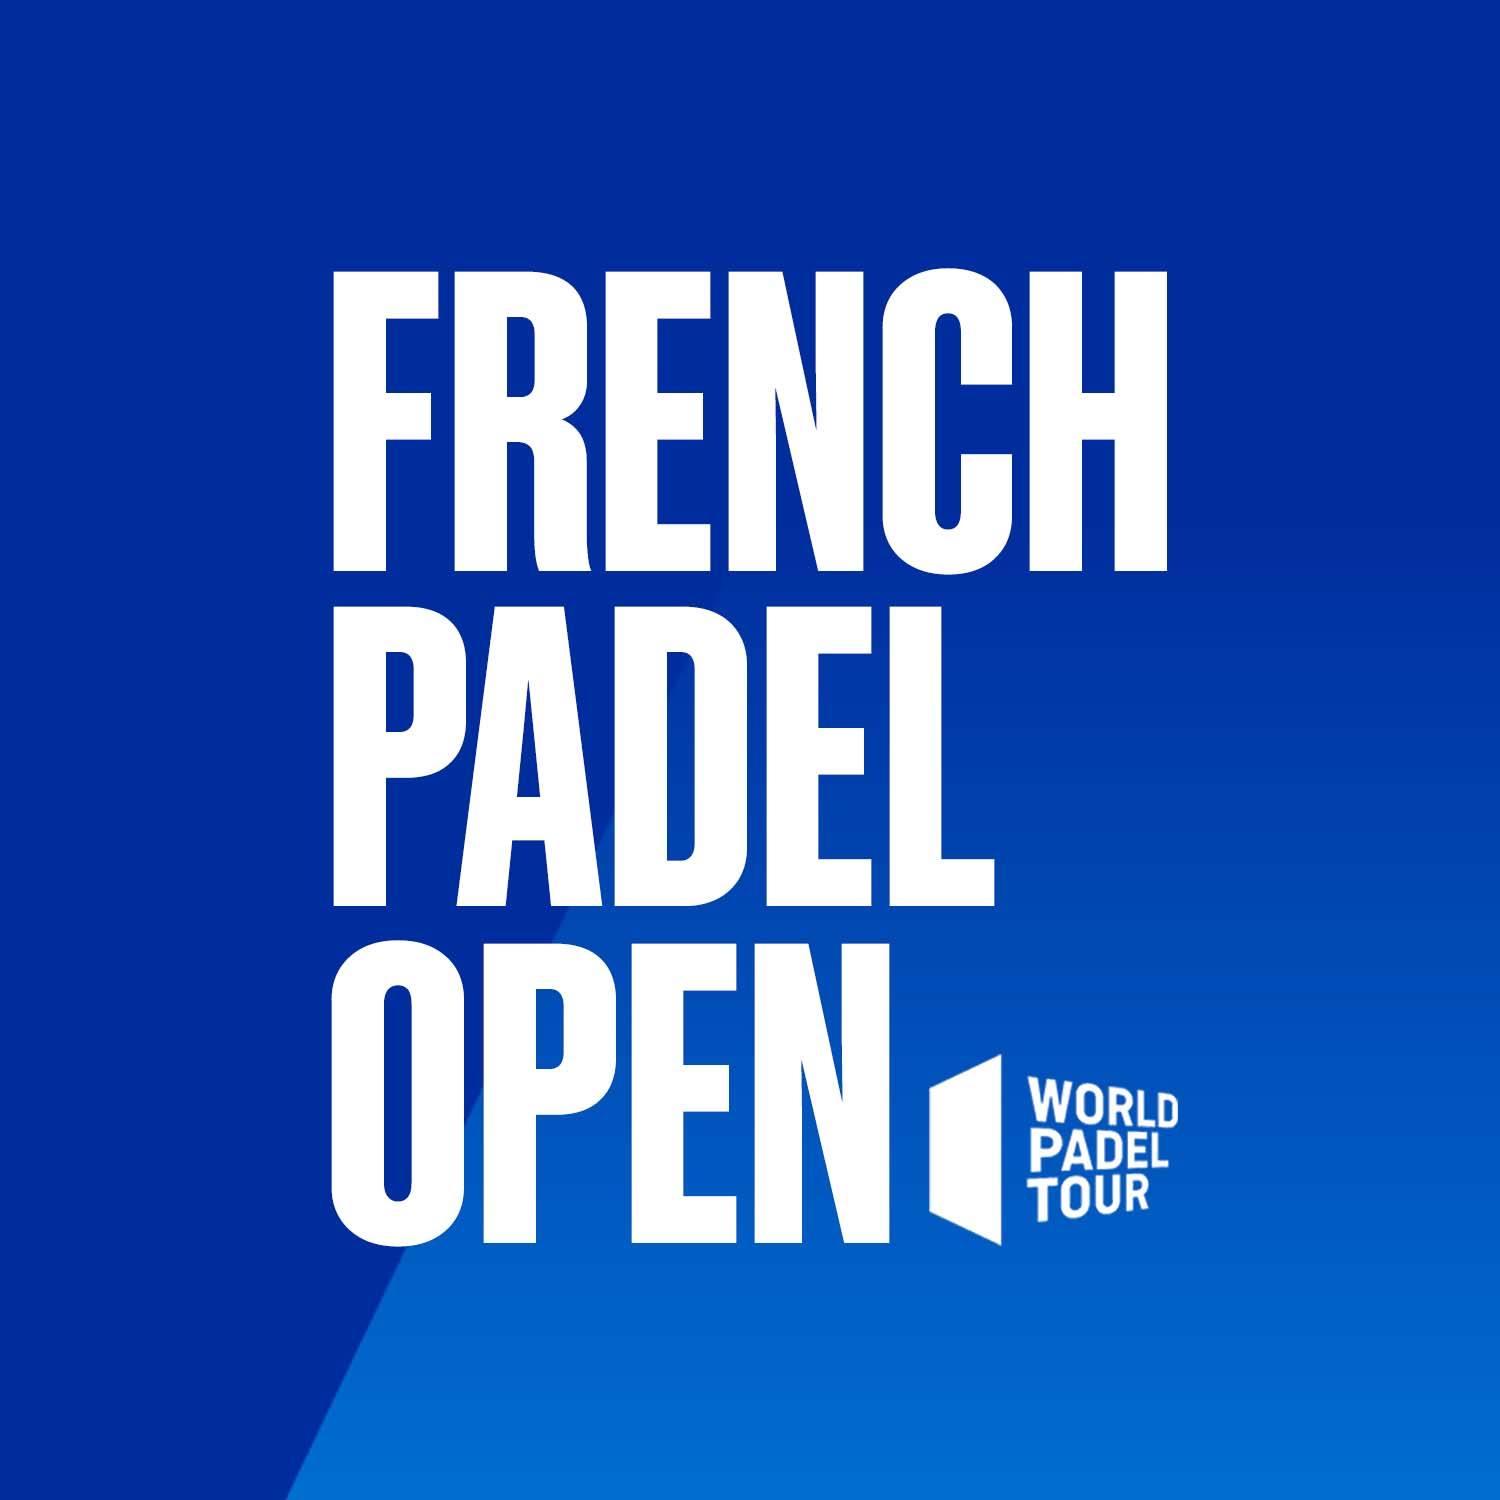 World Padel Tour 法网：售票处即将开放